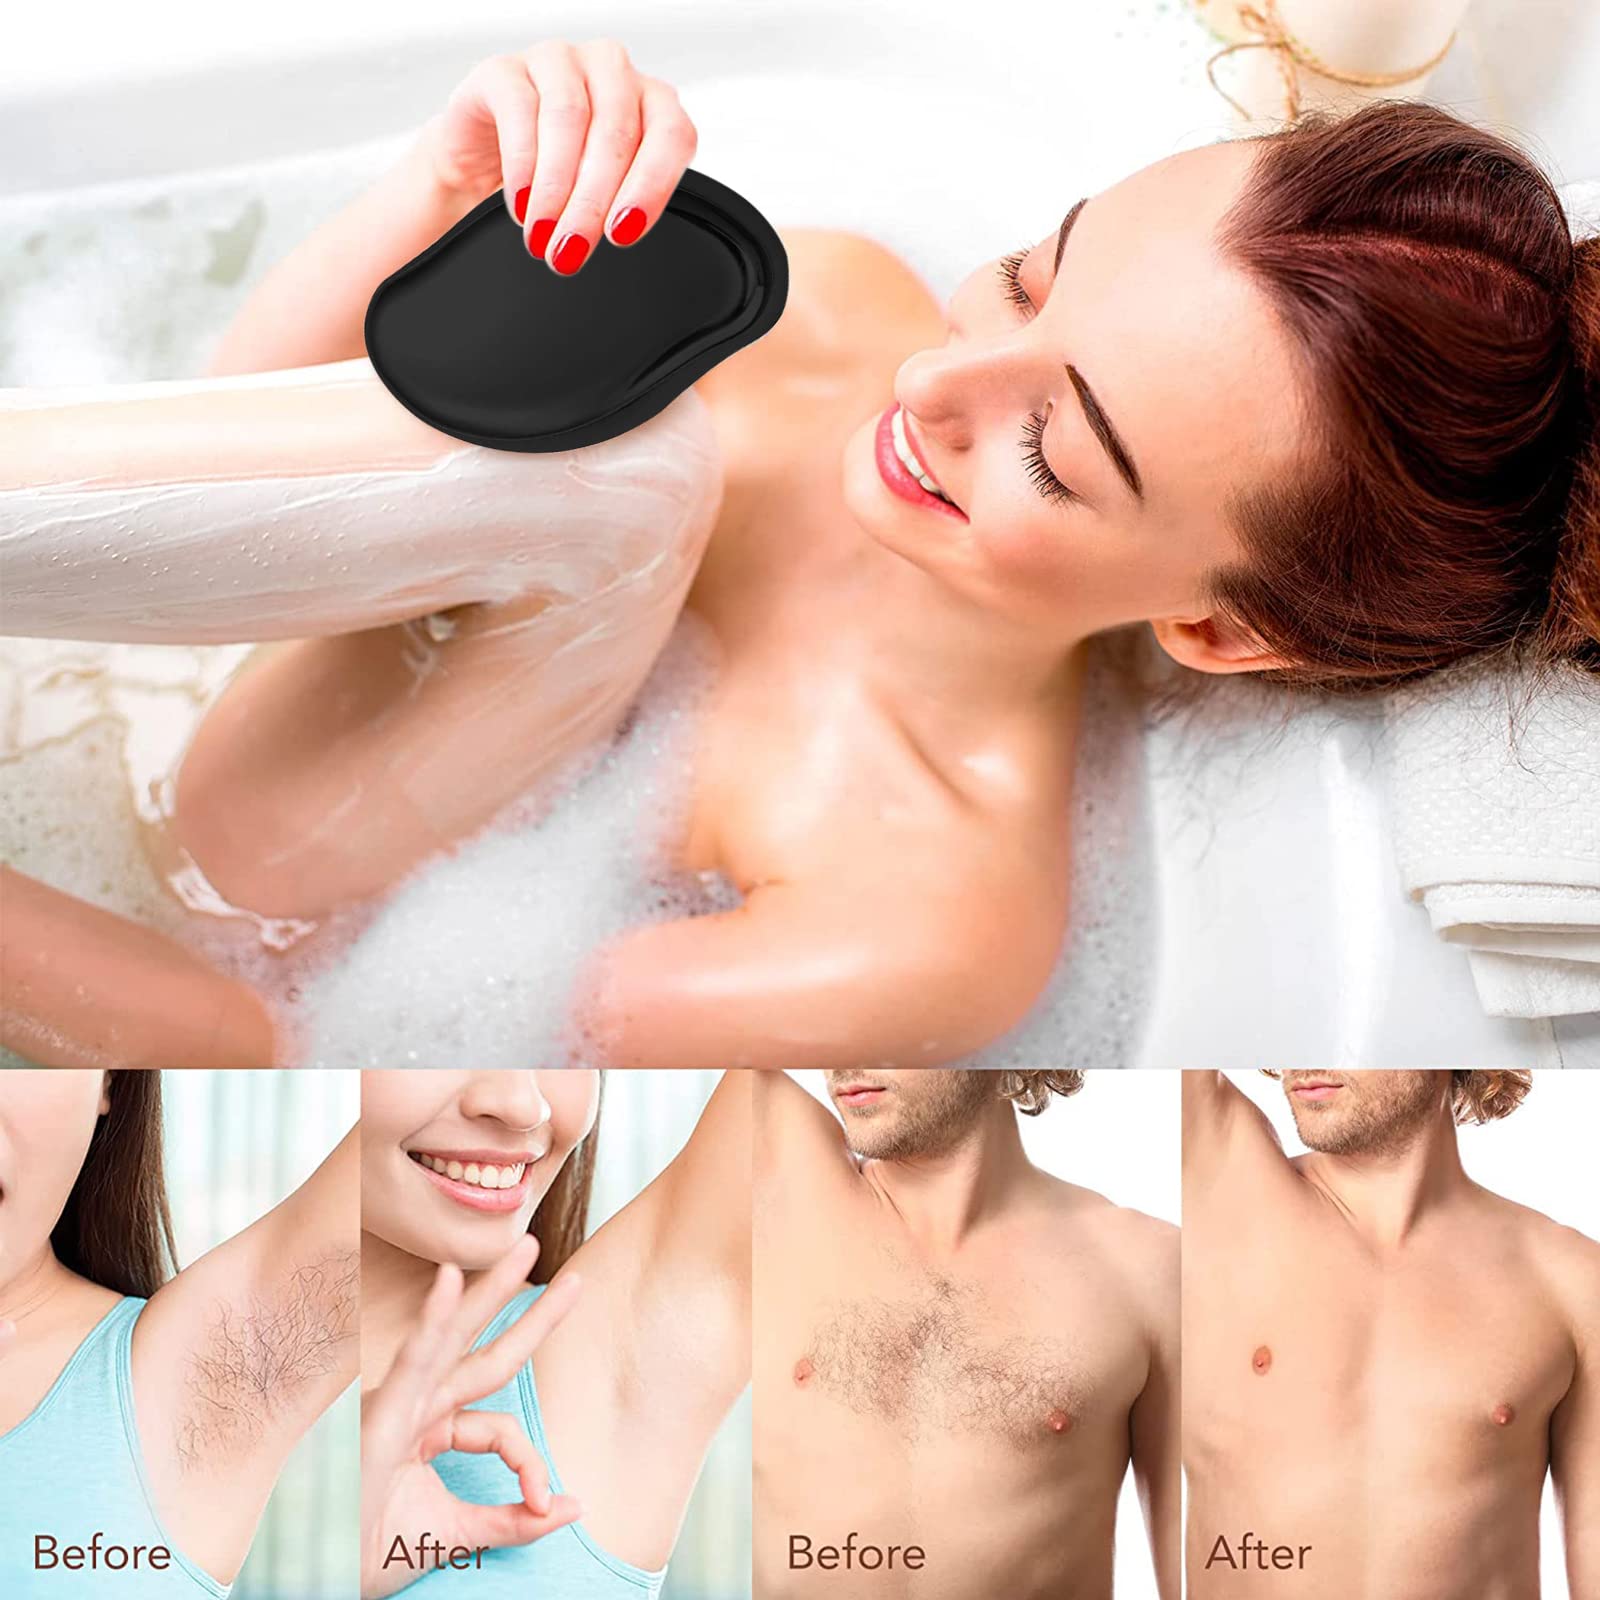 Body Hair Removal Device Scrub Smooth Skin Arms Legs Effective Safe | eBay